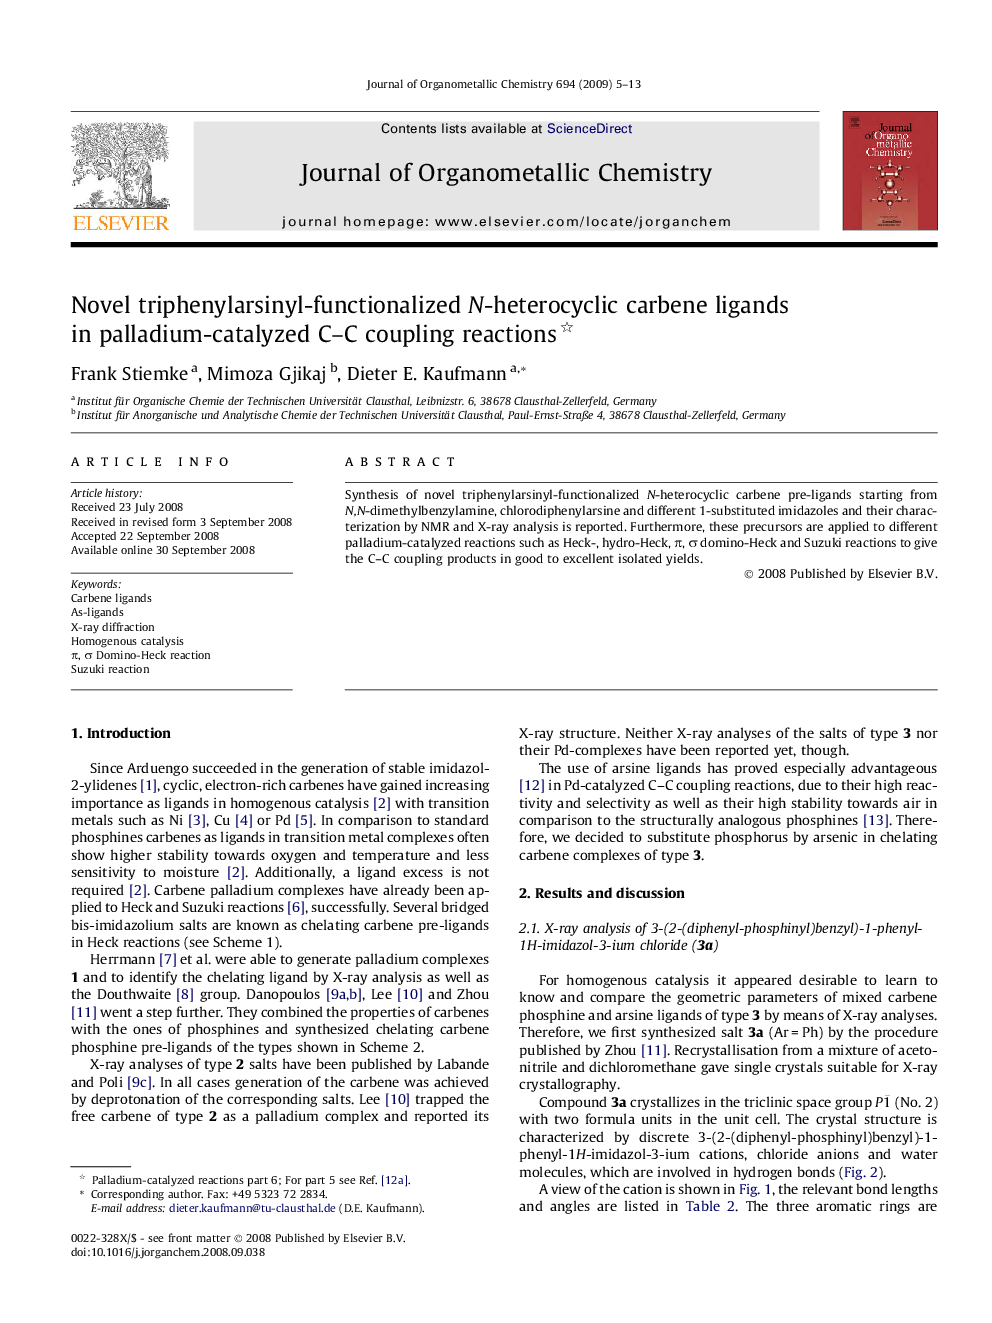 Novel triphenylarsinyl-functionalized N-heterocyclic carbene ligands in palladium-catalyzed C–C coupling reactions 